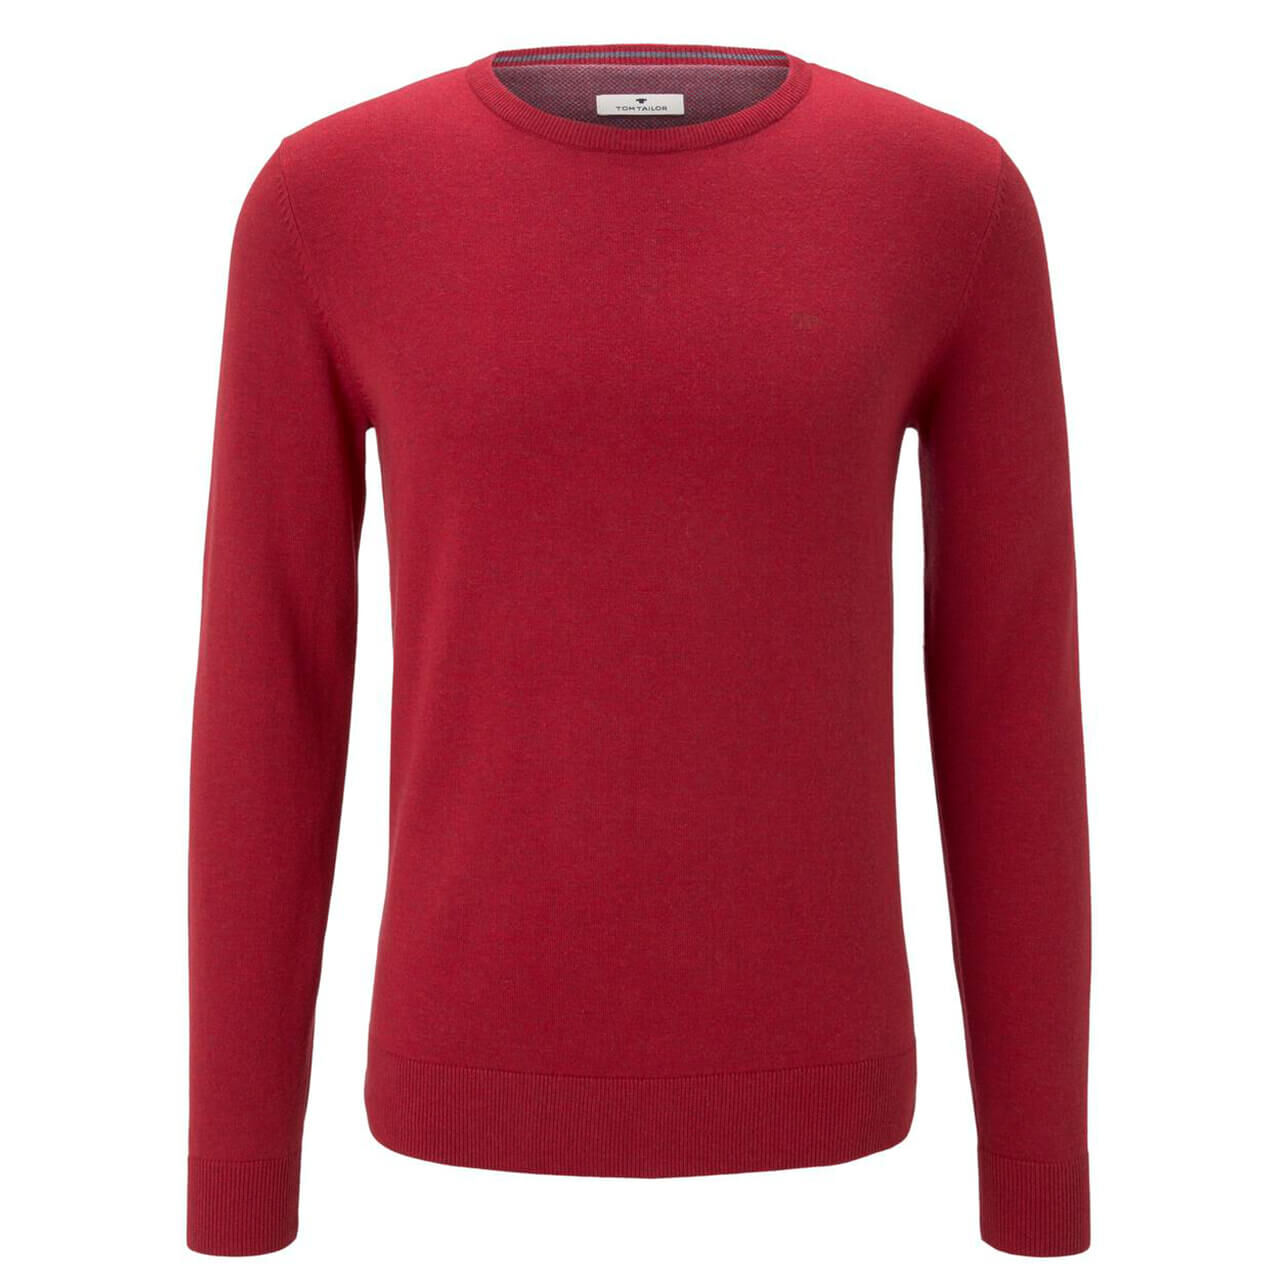 Tom Tailor Basic Crew-neck Sweater Pullover für Herren in Rot, FarbNr.: 24249